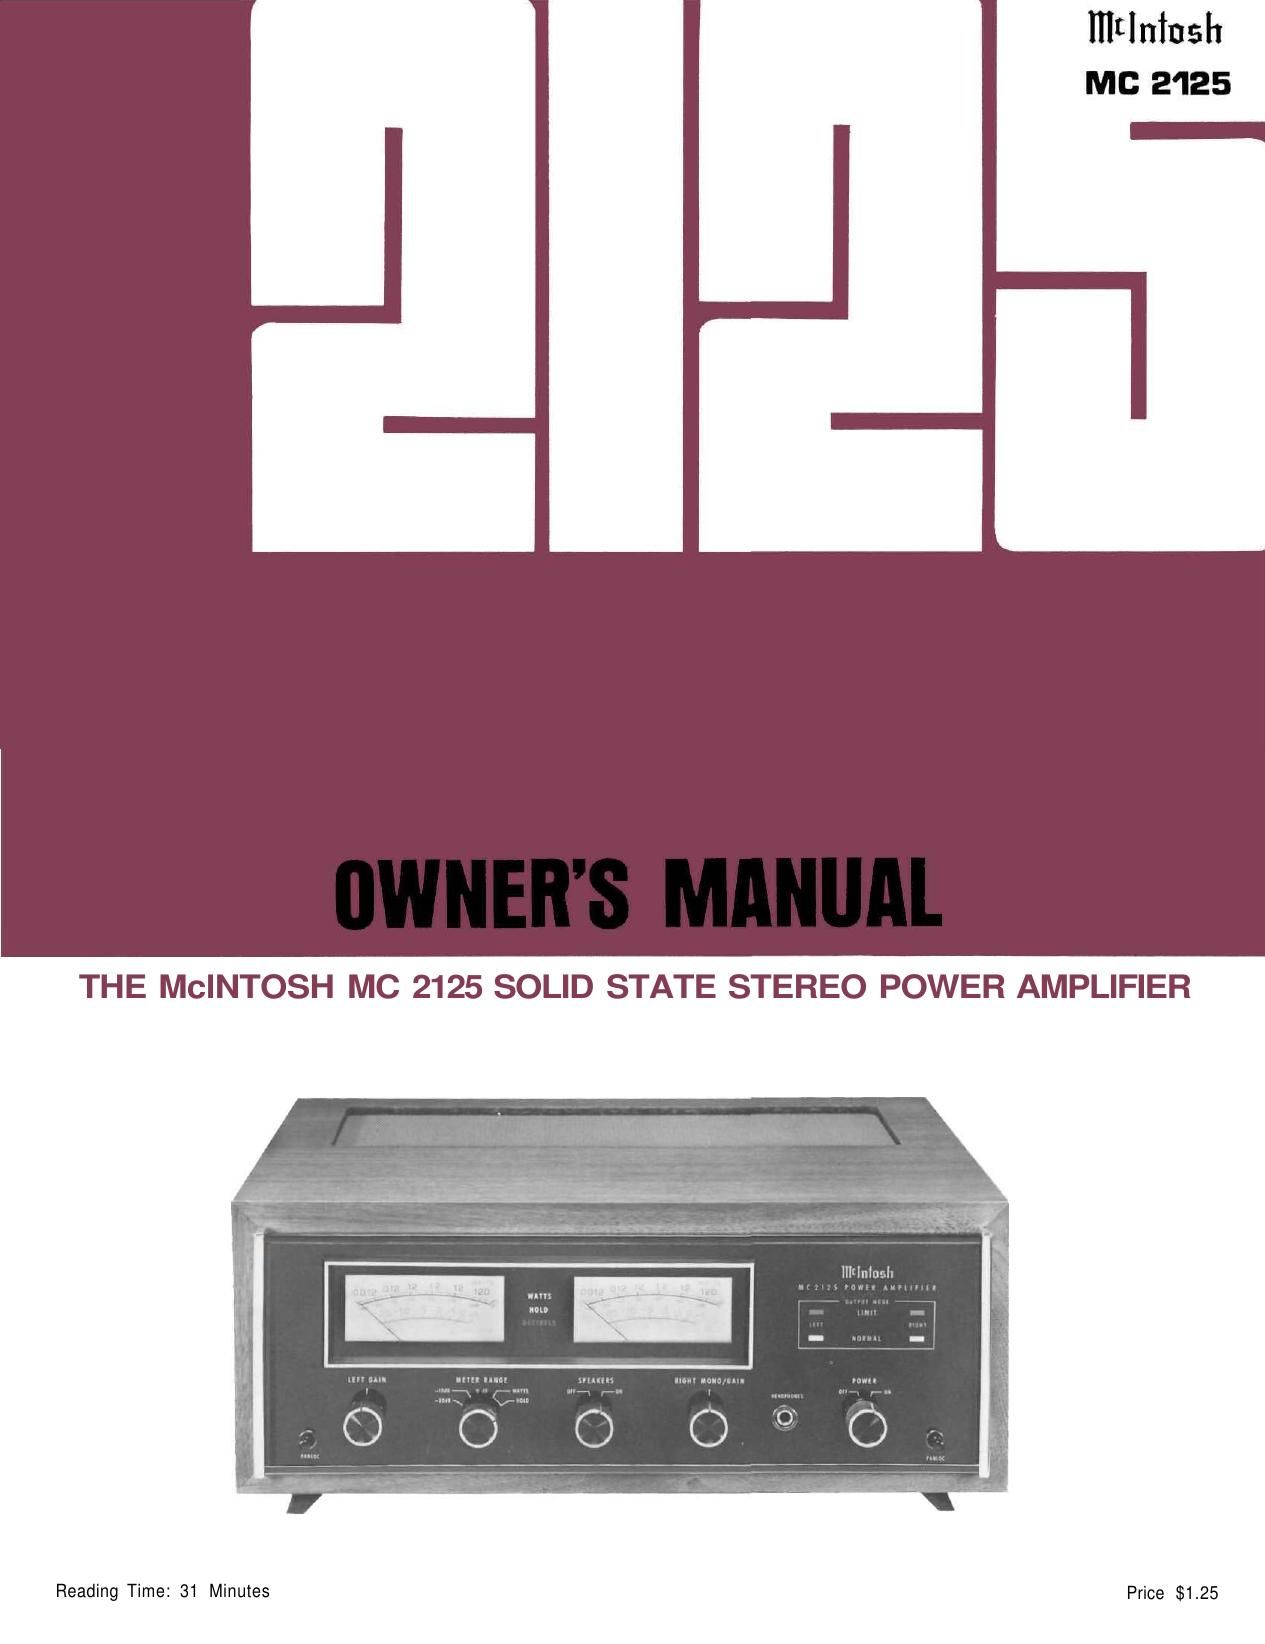 McIntosh MC 2125 Owners Manual